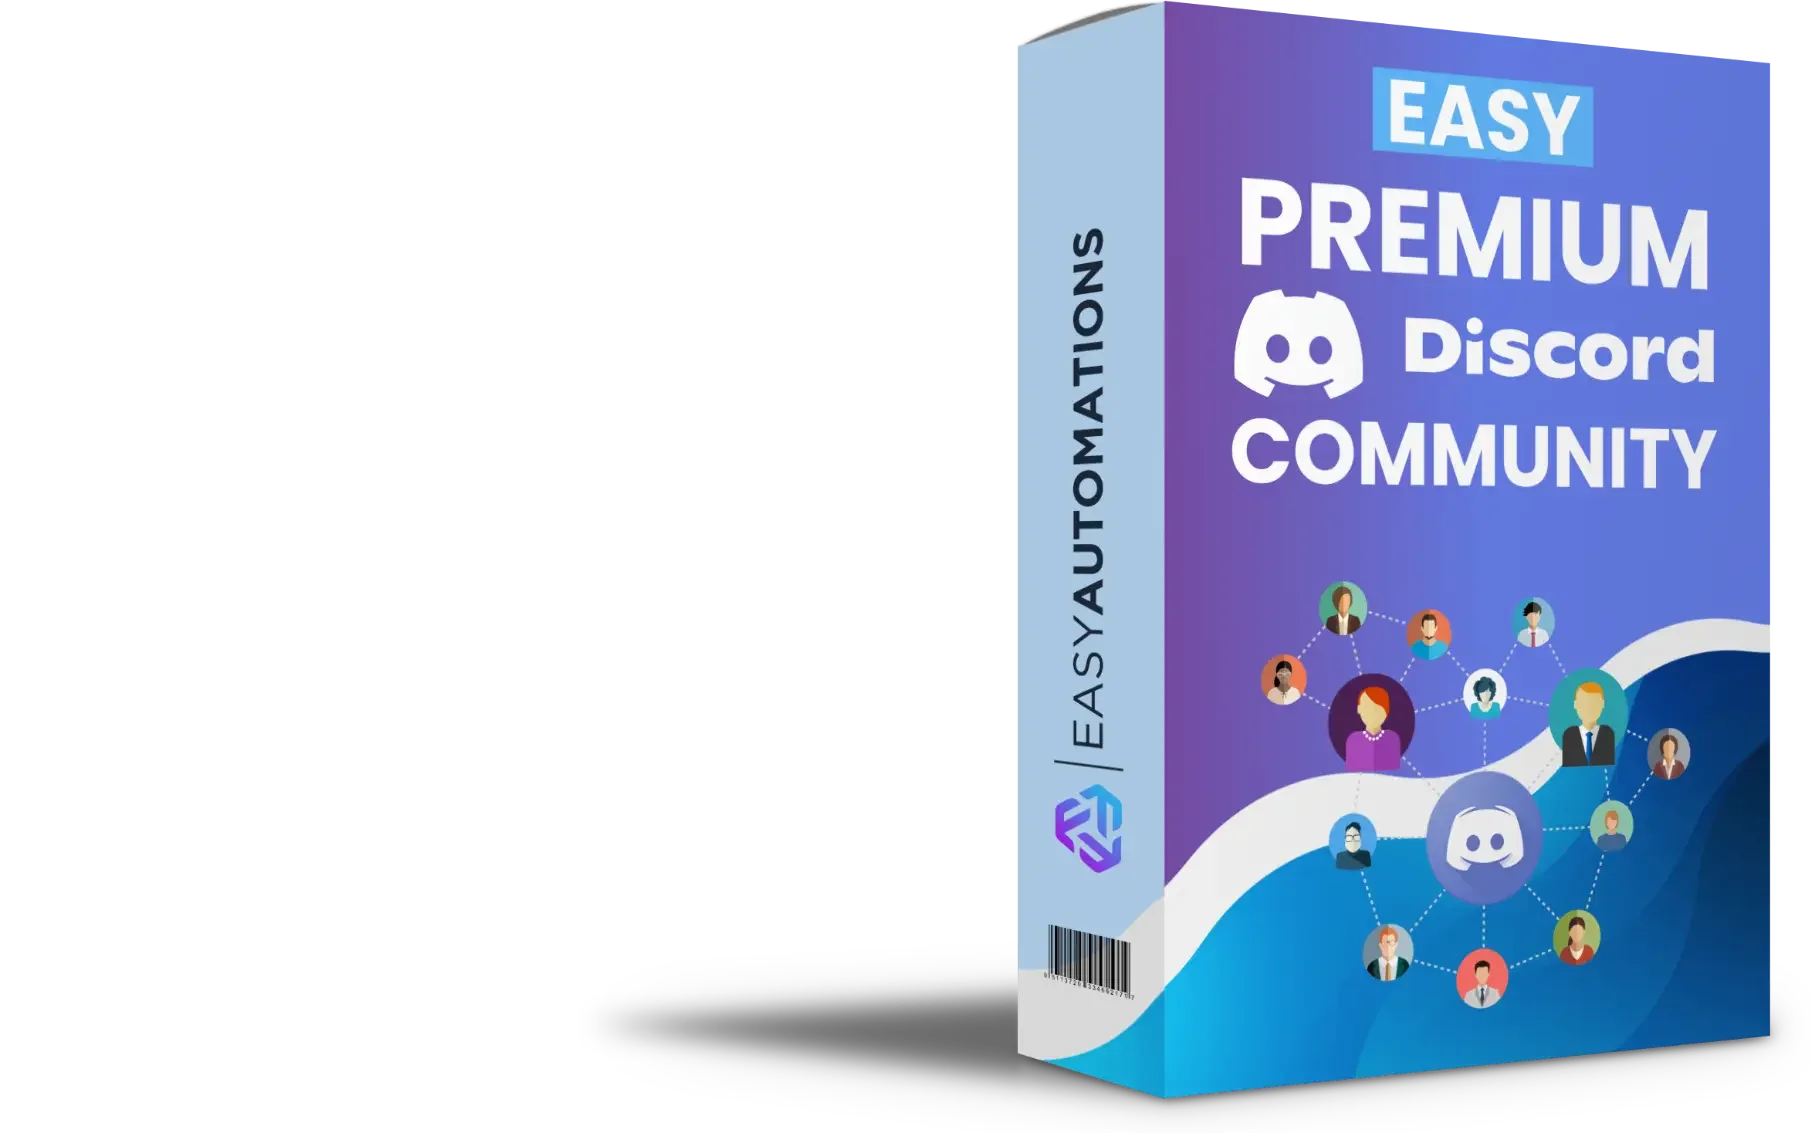 Easy Premium Discord Community